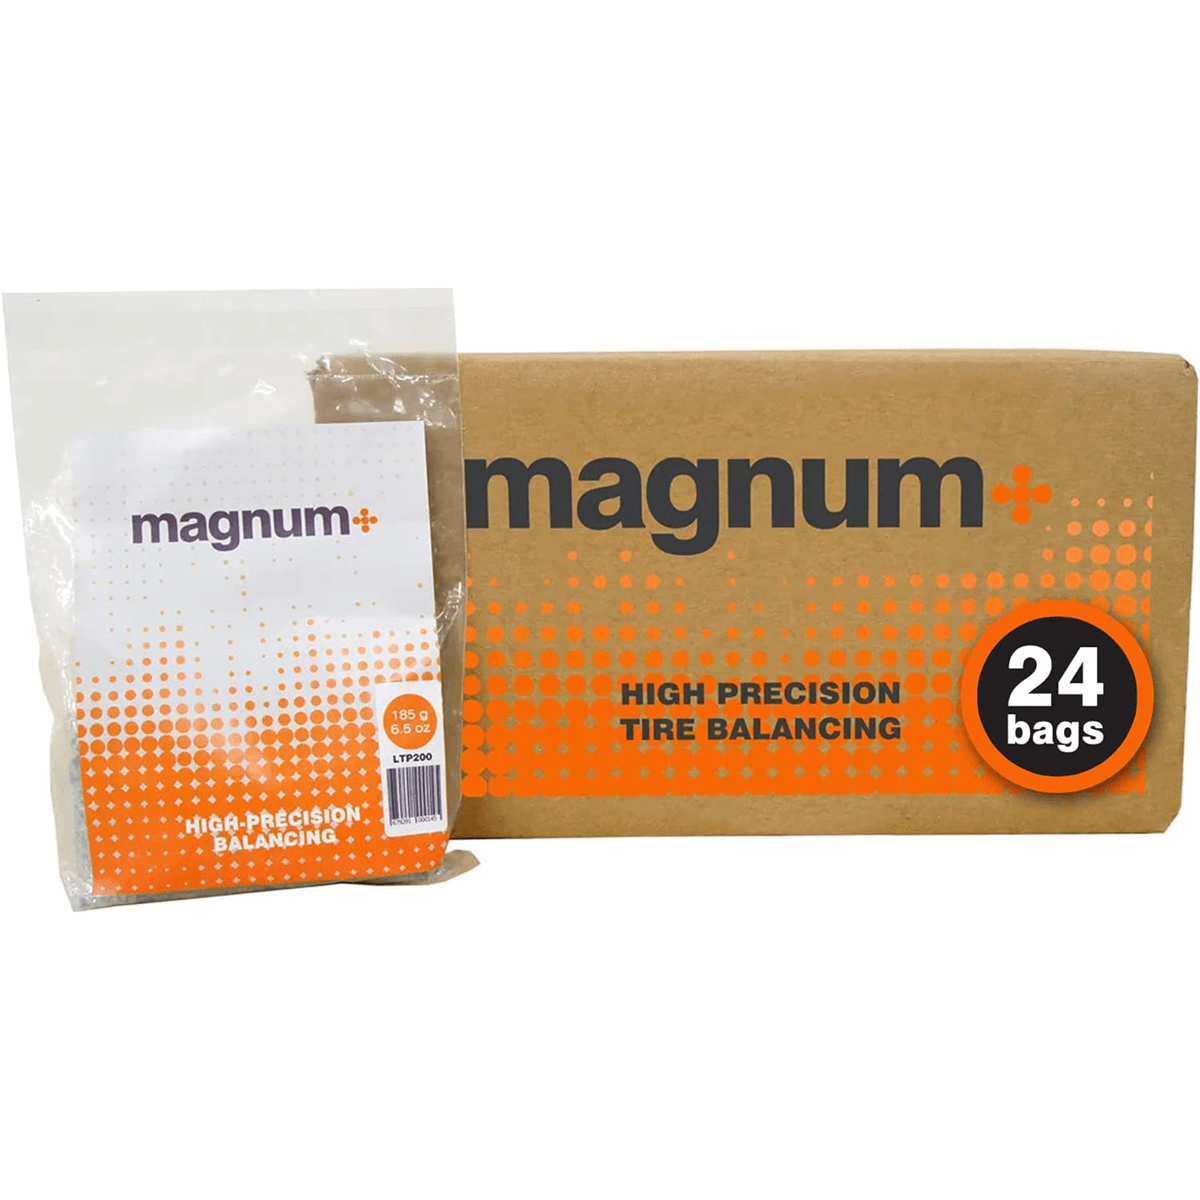 LTP200 MAGNUM Case of 24 bags (6.5 oz)